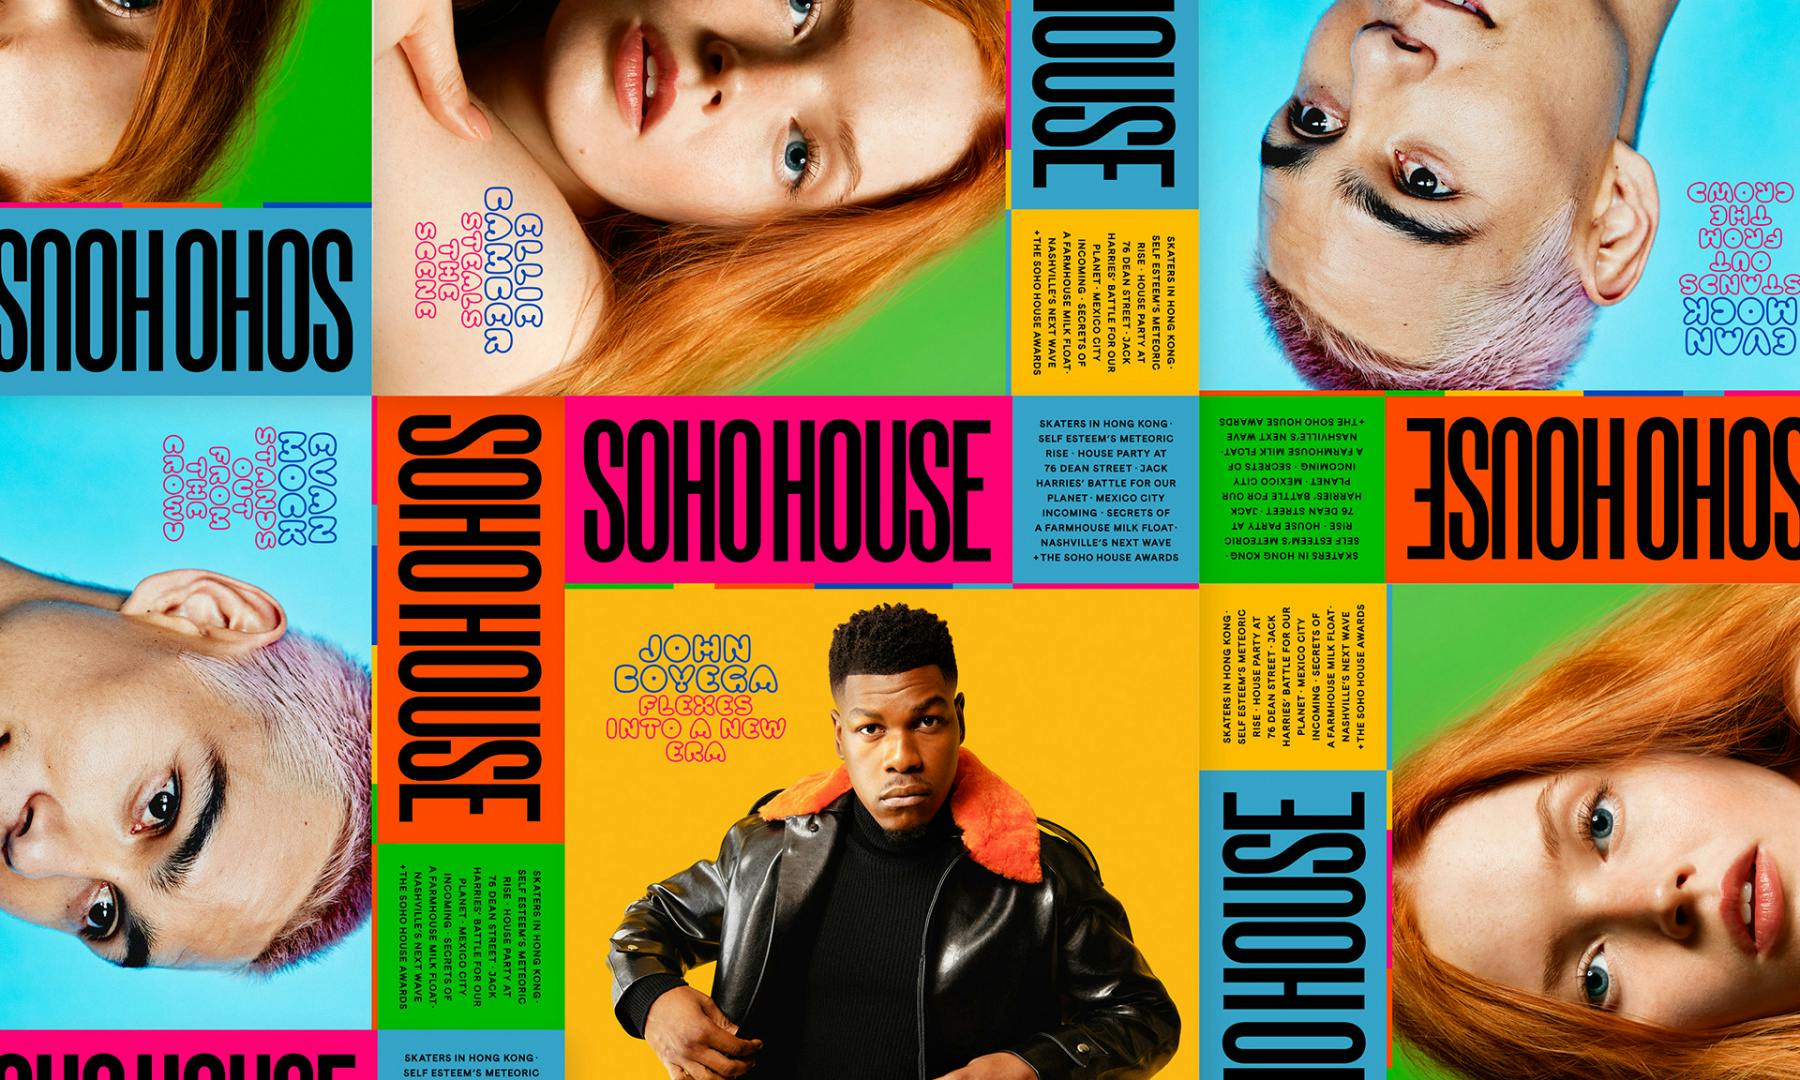 Image of the three Soho House magazine covers featuring portraits of John Boyega, Ellie Bamber and Evan Mock